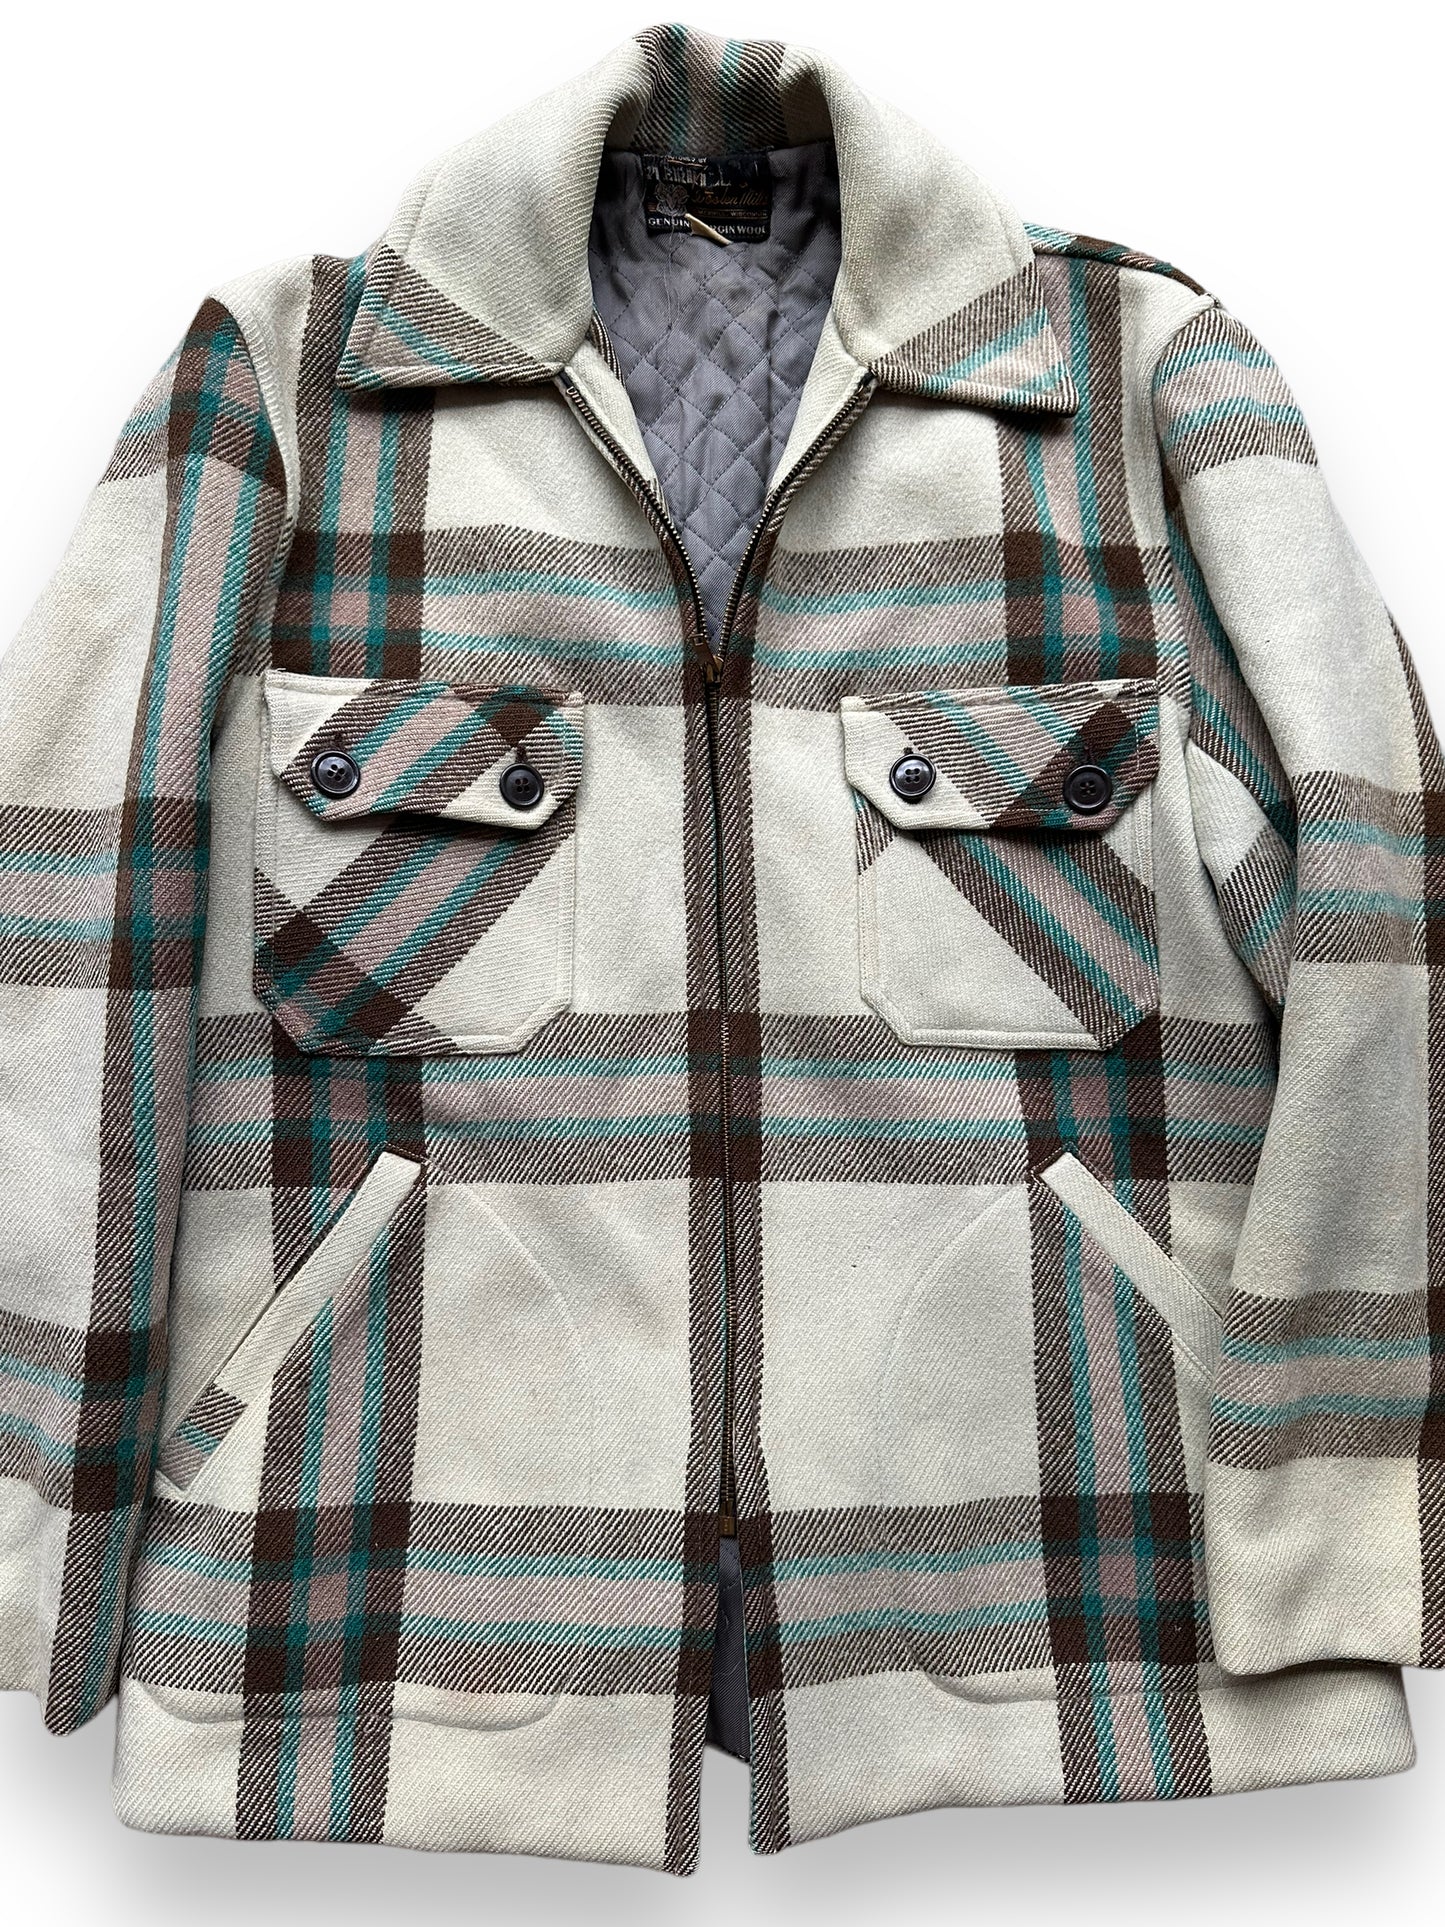 Front Detail on Vintage Merrill Woolen Mills Jacket SZ L |  Barn Owl Vintage Goods | Vintage Wool Coat Seattle